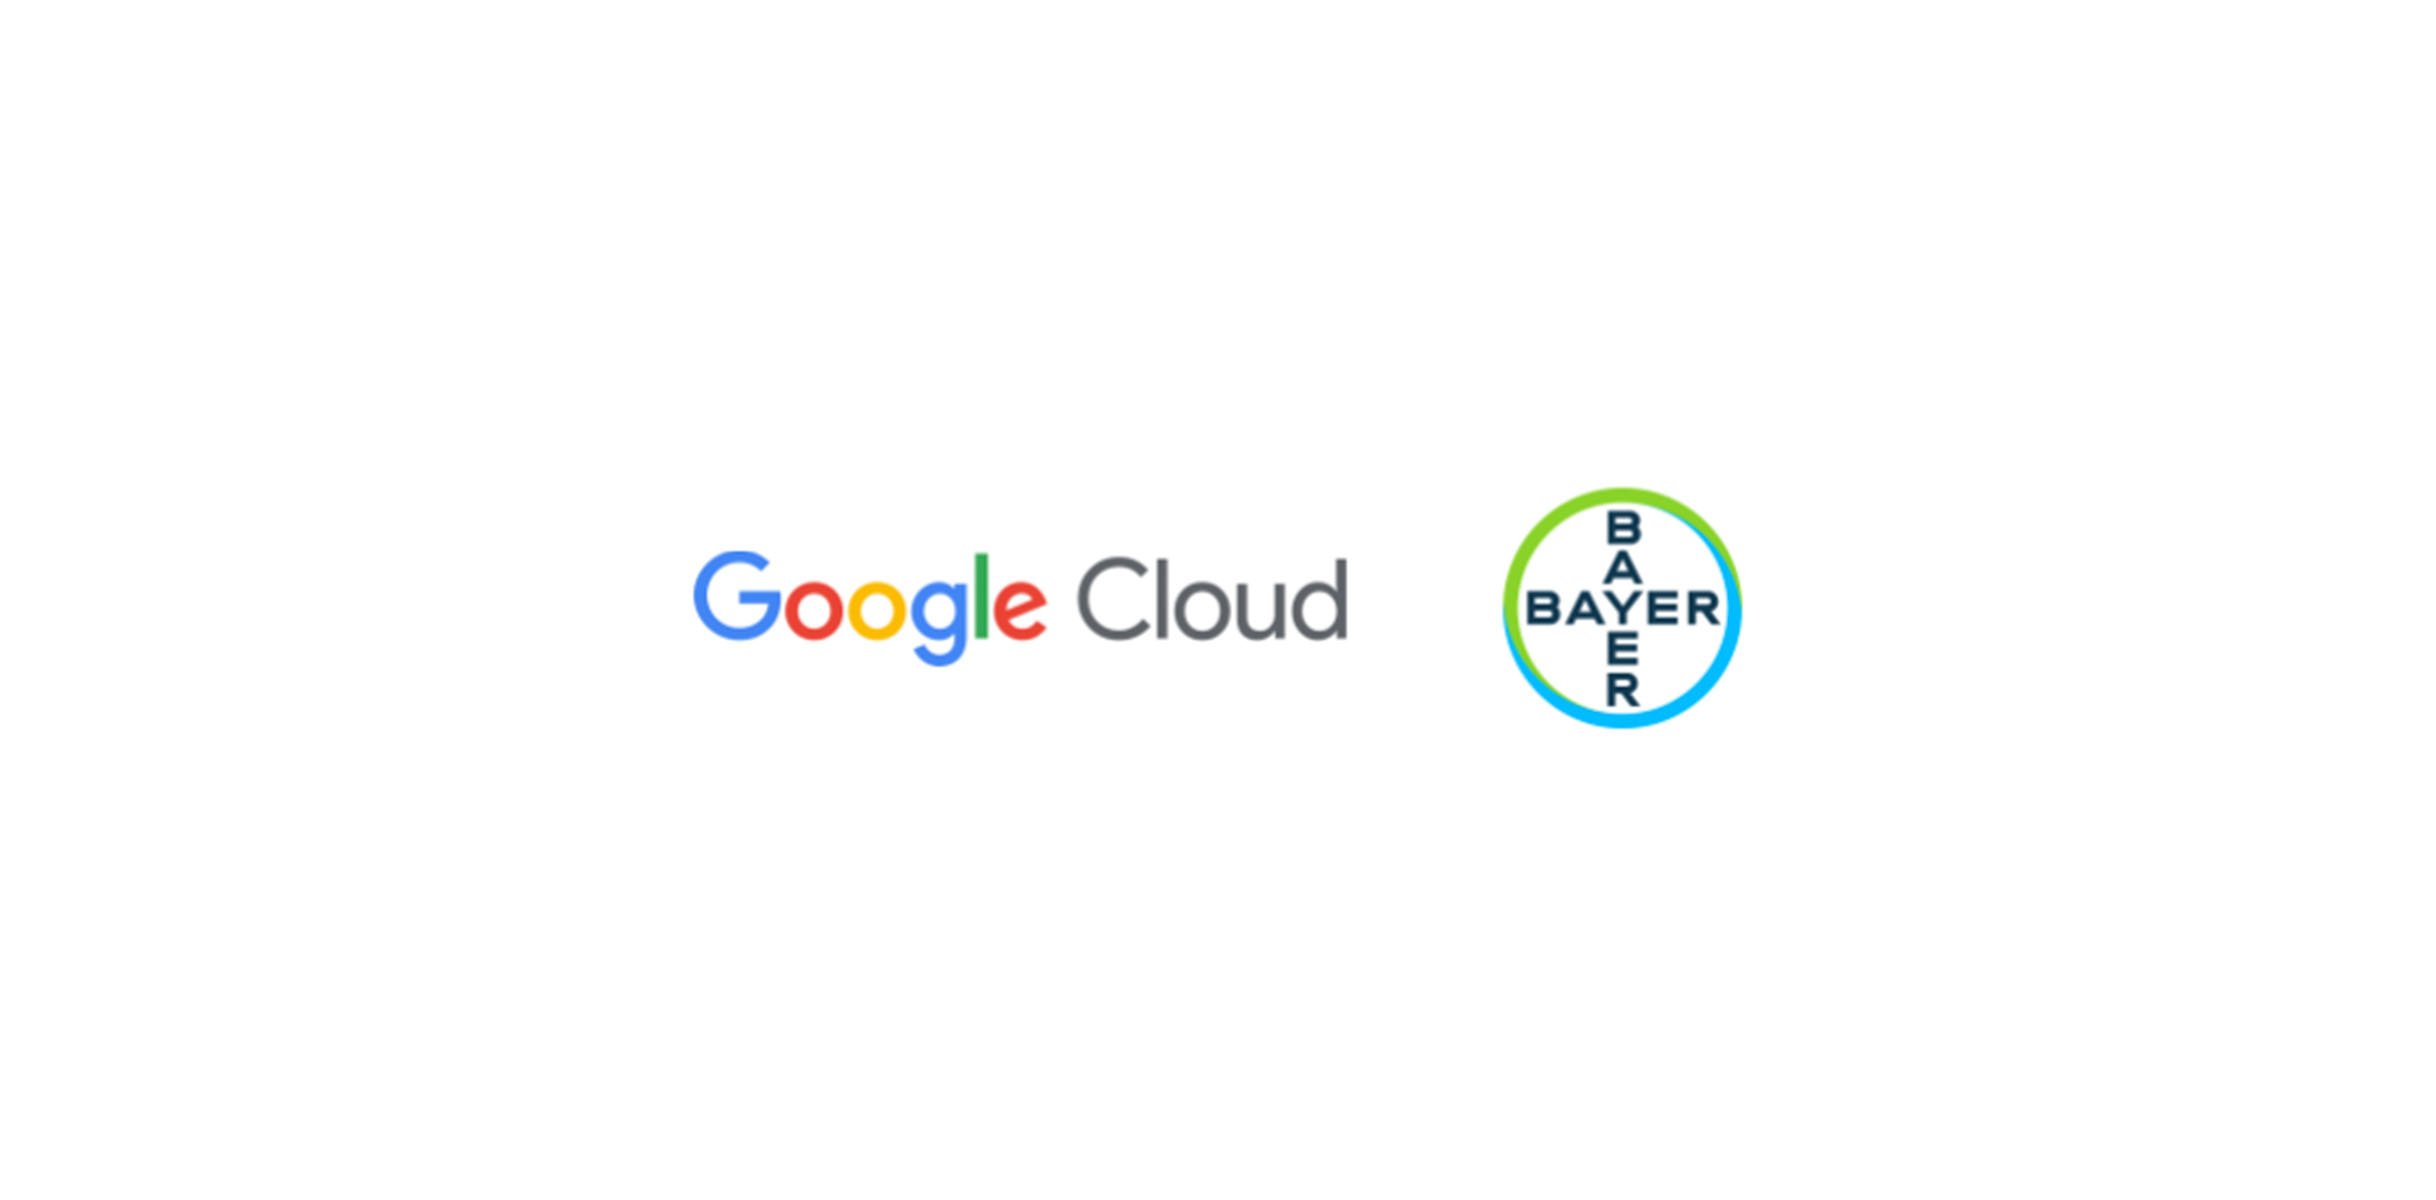 https://storage.googleapis.com/gweb-cloudblog-publish/images/Bayer_x_Google_Cloud.max-2500x2500.jpg